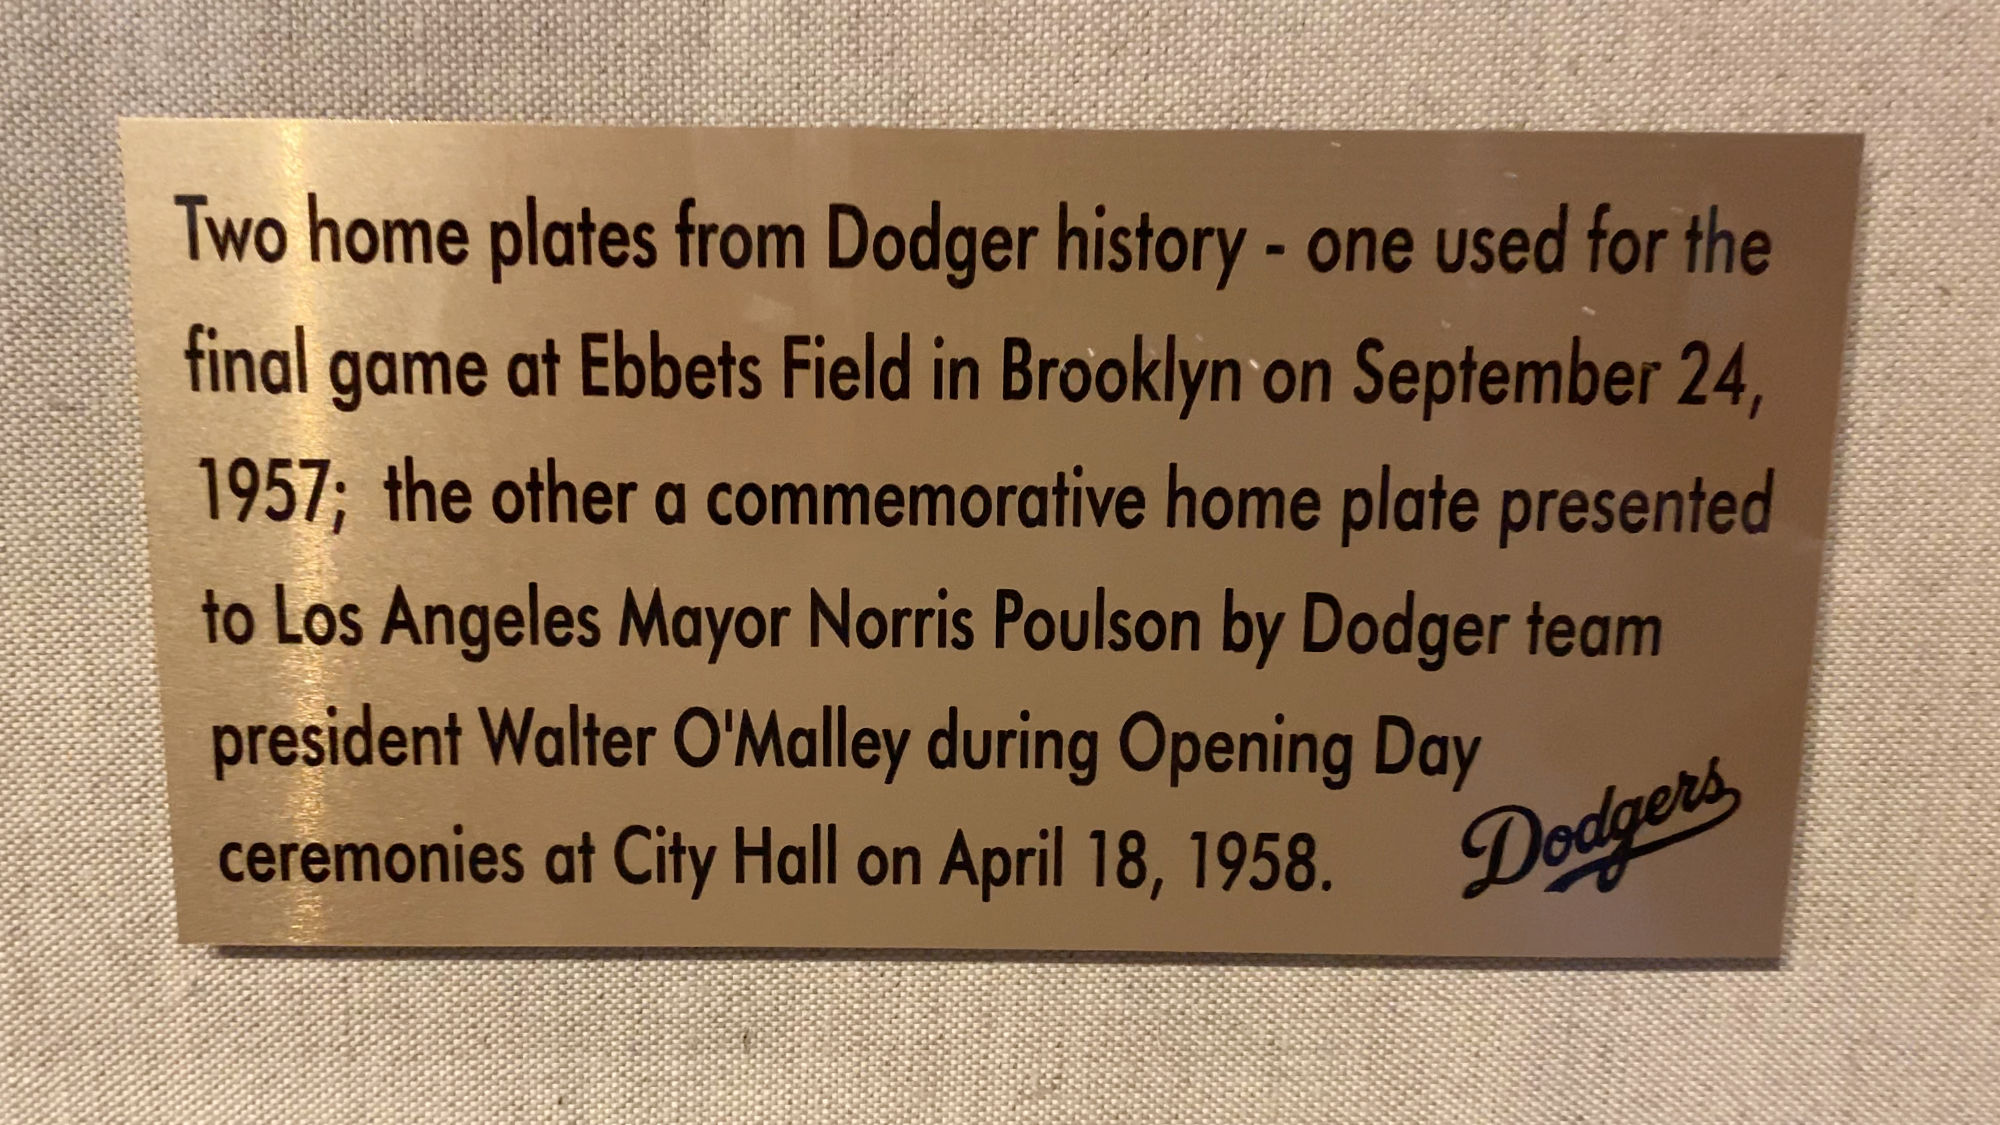 Dodger Stadium Historic Home Plates